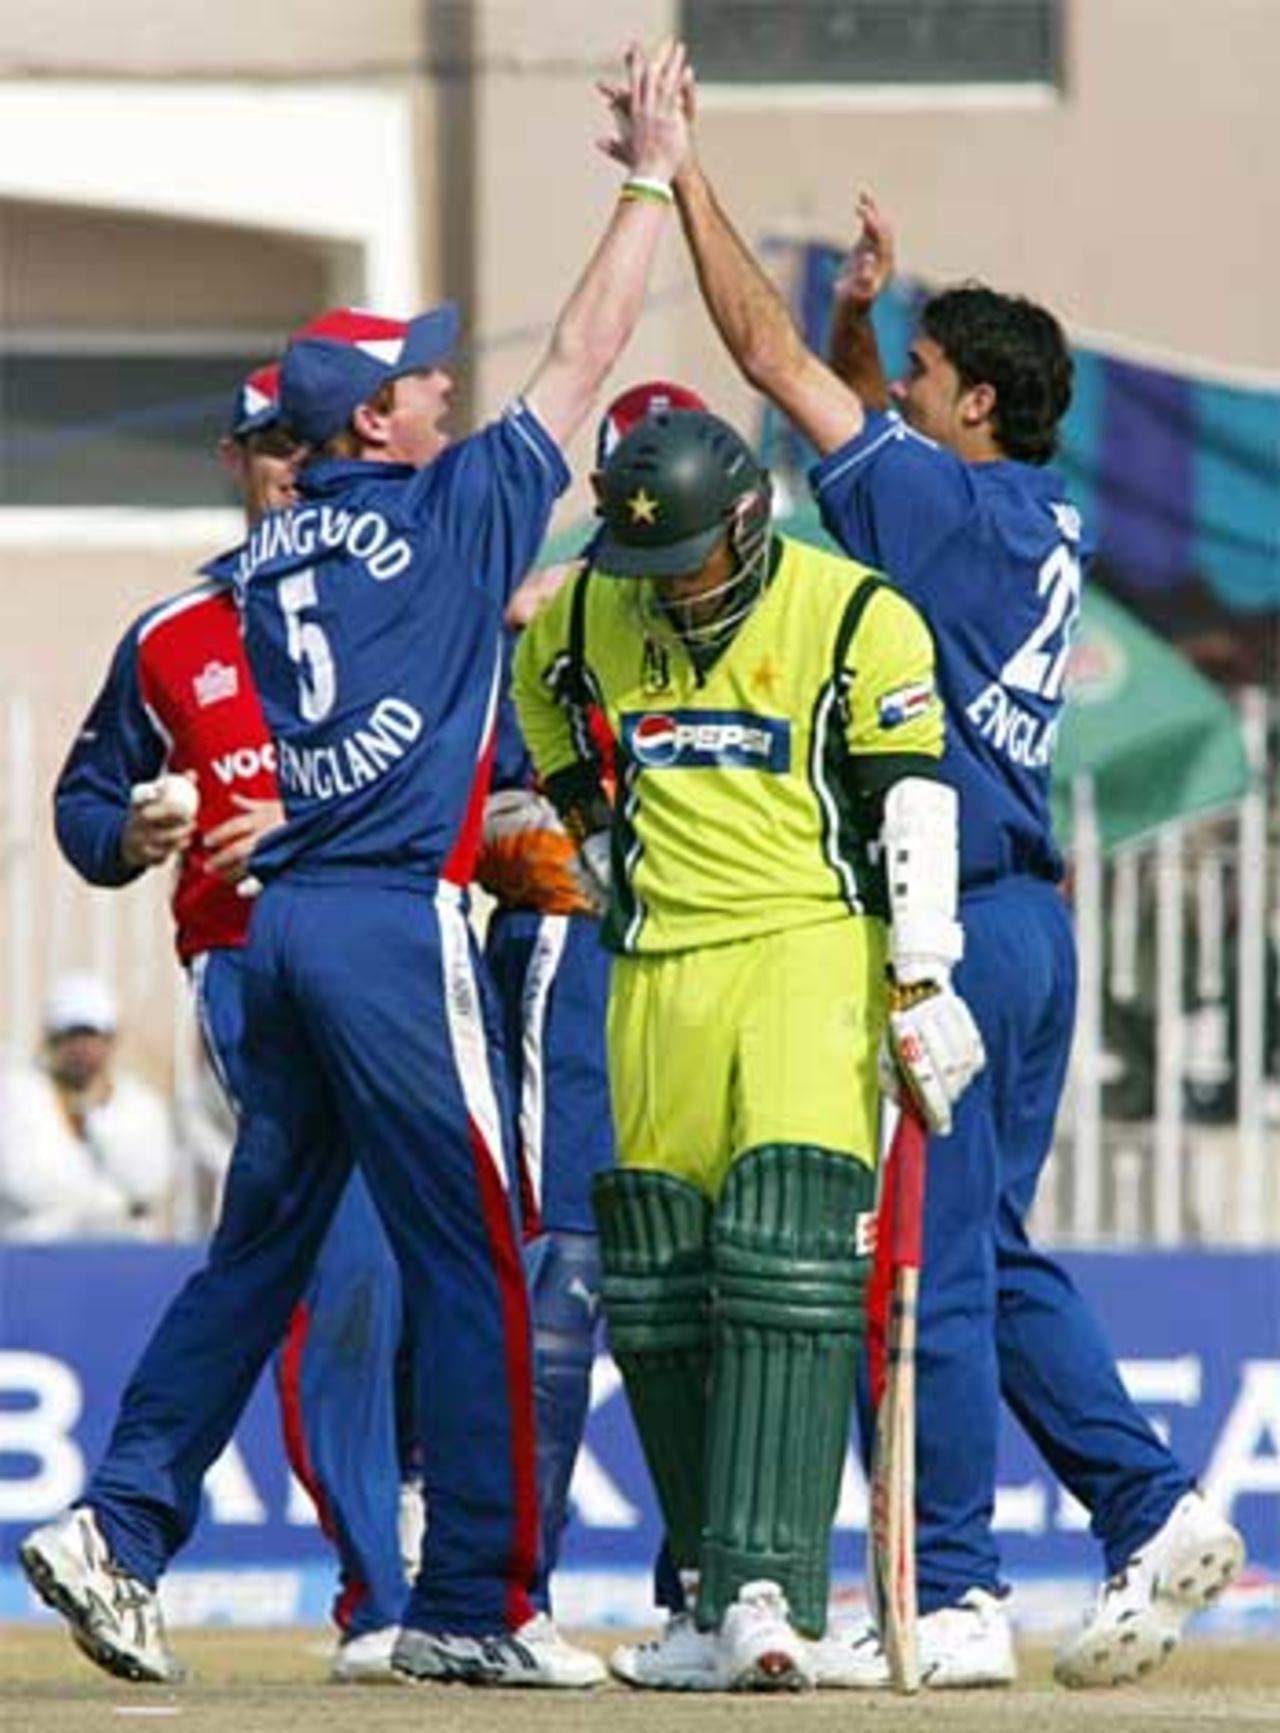 England celebrate as Mohammad Yousuf falls, Pakistan v England, 4th ODI, Pakistan, December 19, 2005